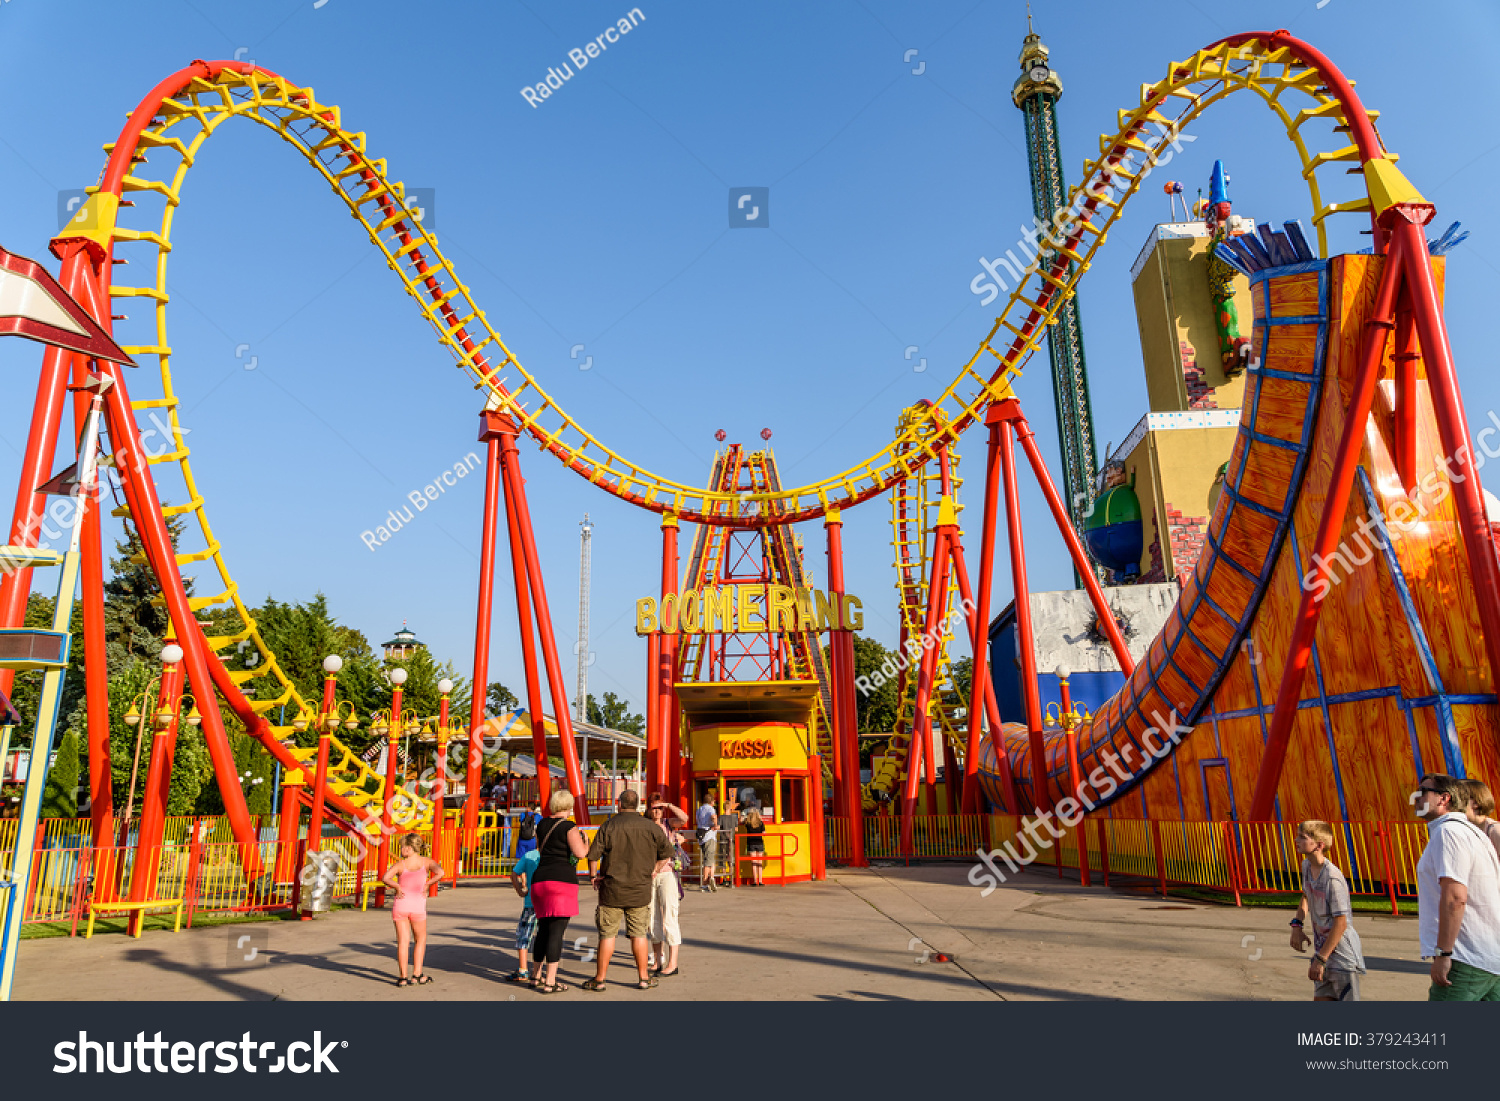 Vienna, Austria - August 09, 2015: People Having Fun On Roller Coaster ...